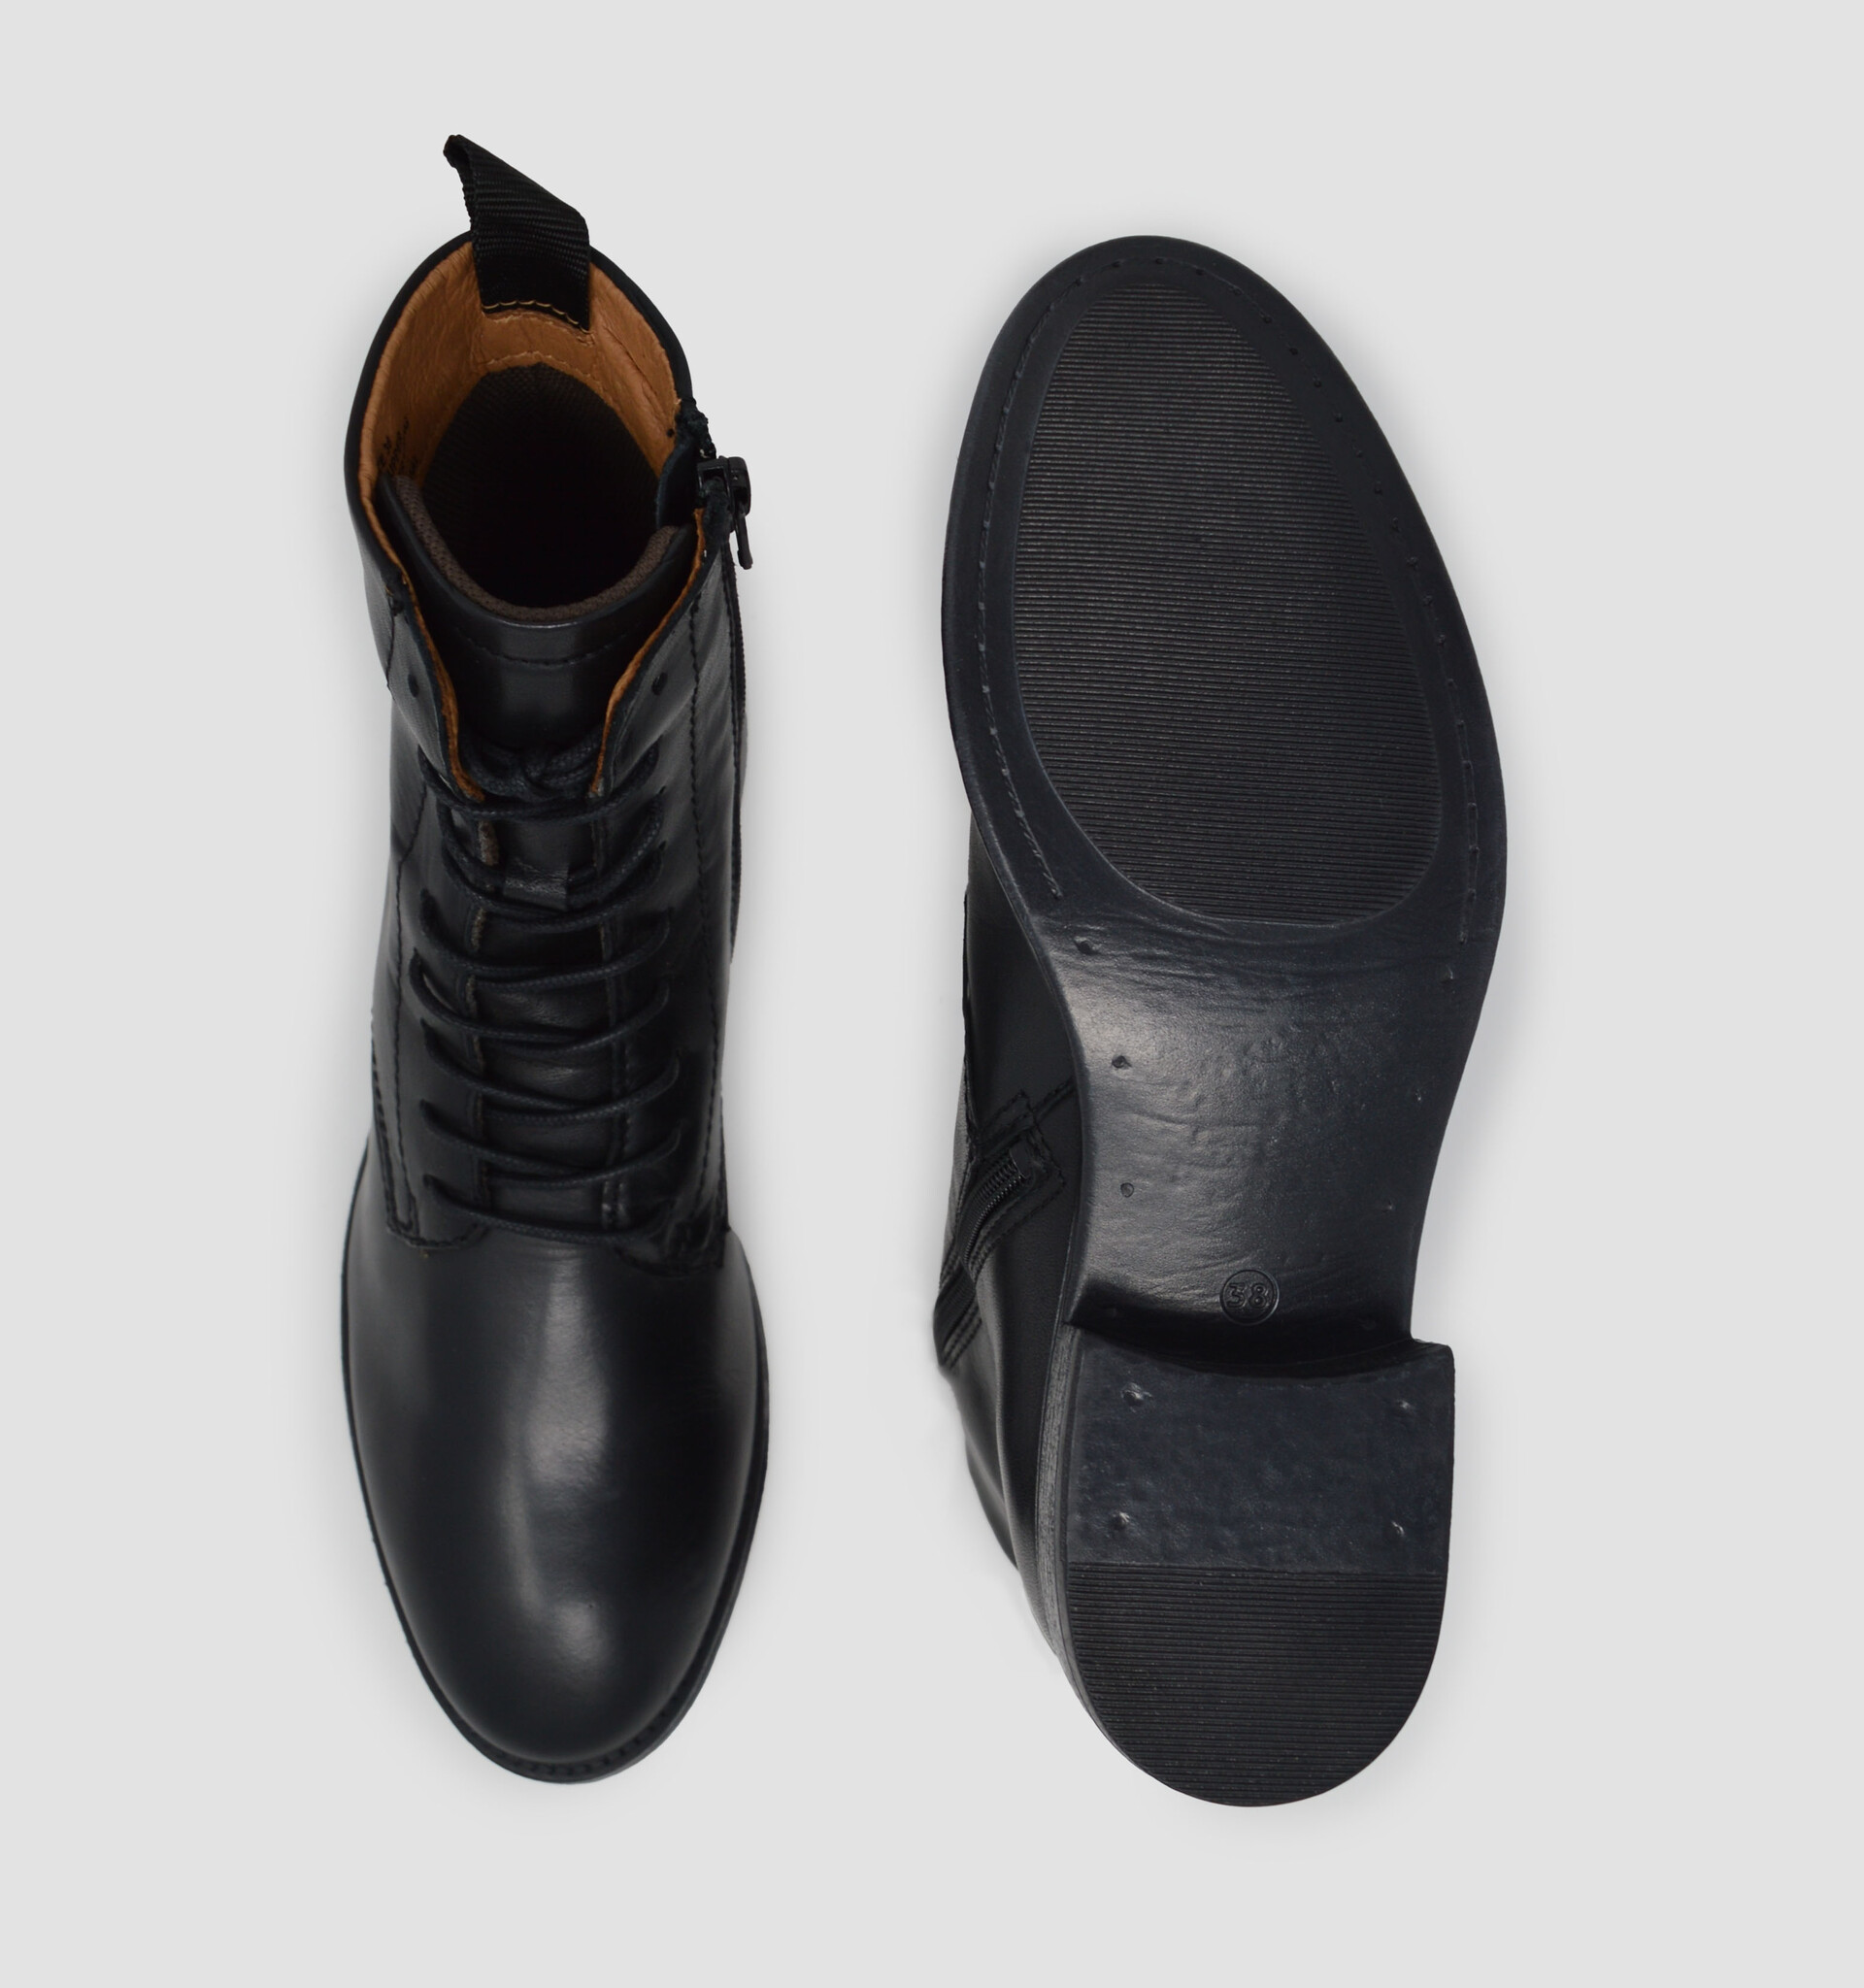 Real Leather Executive Half Shoe in Adabraka - Shoes, Kels